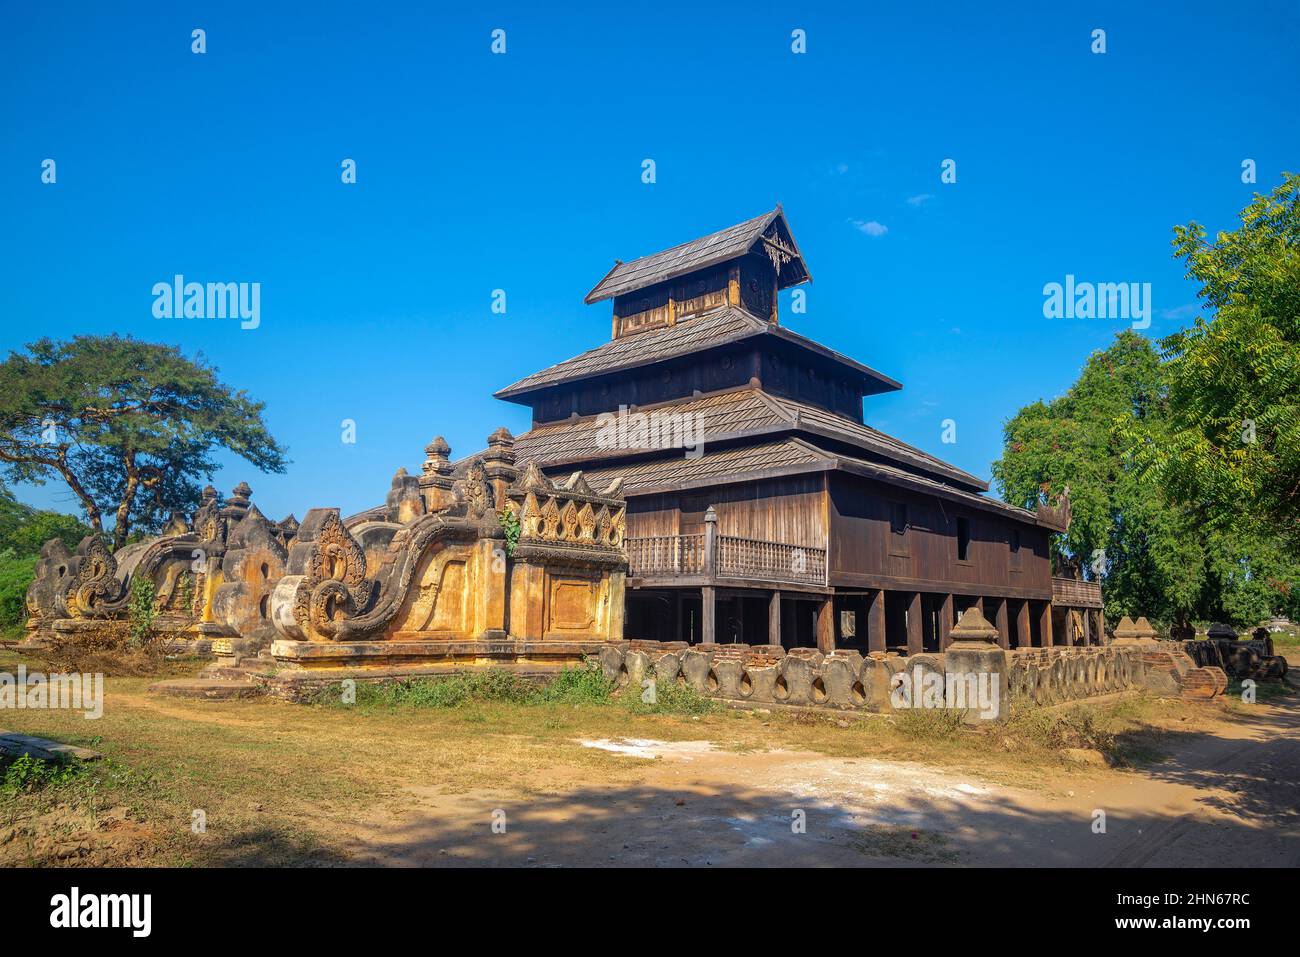 Ancient wooden Buddhist temple. Old Bagan, Burma (Myanmar) Stock Photo